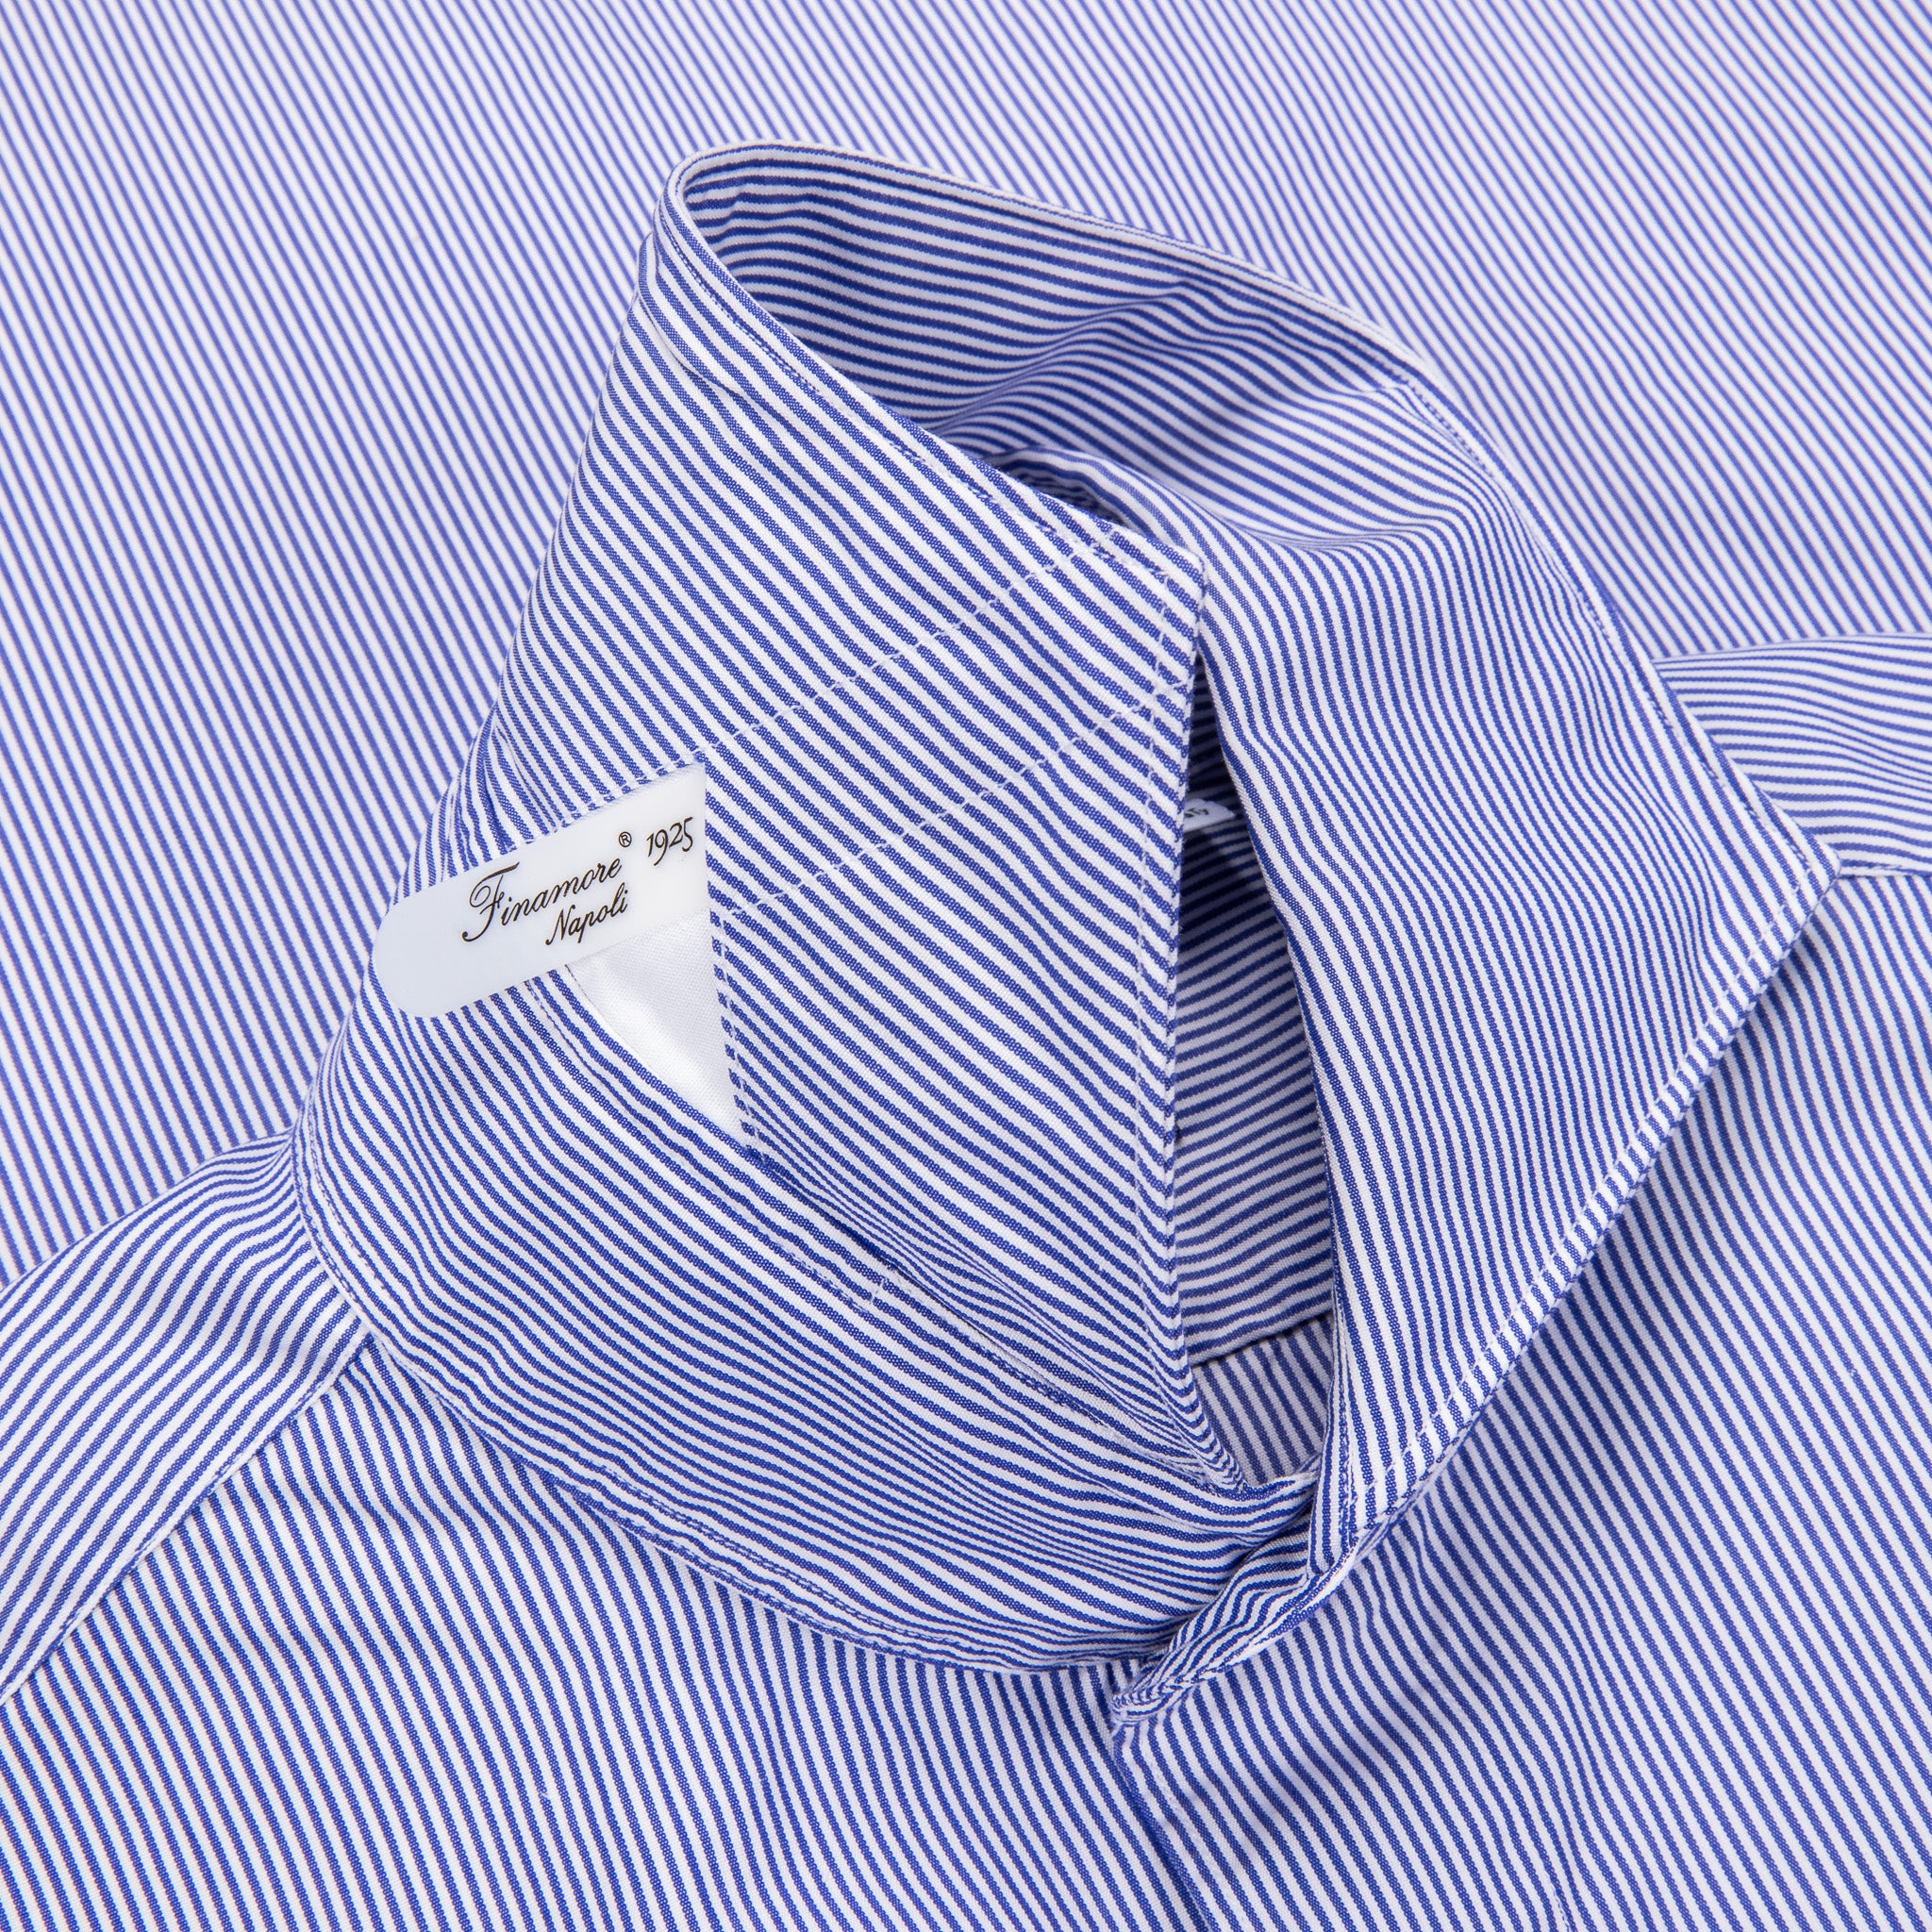 Finamore Gaeta shirt Sergio Collar Navy stripe poplin